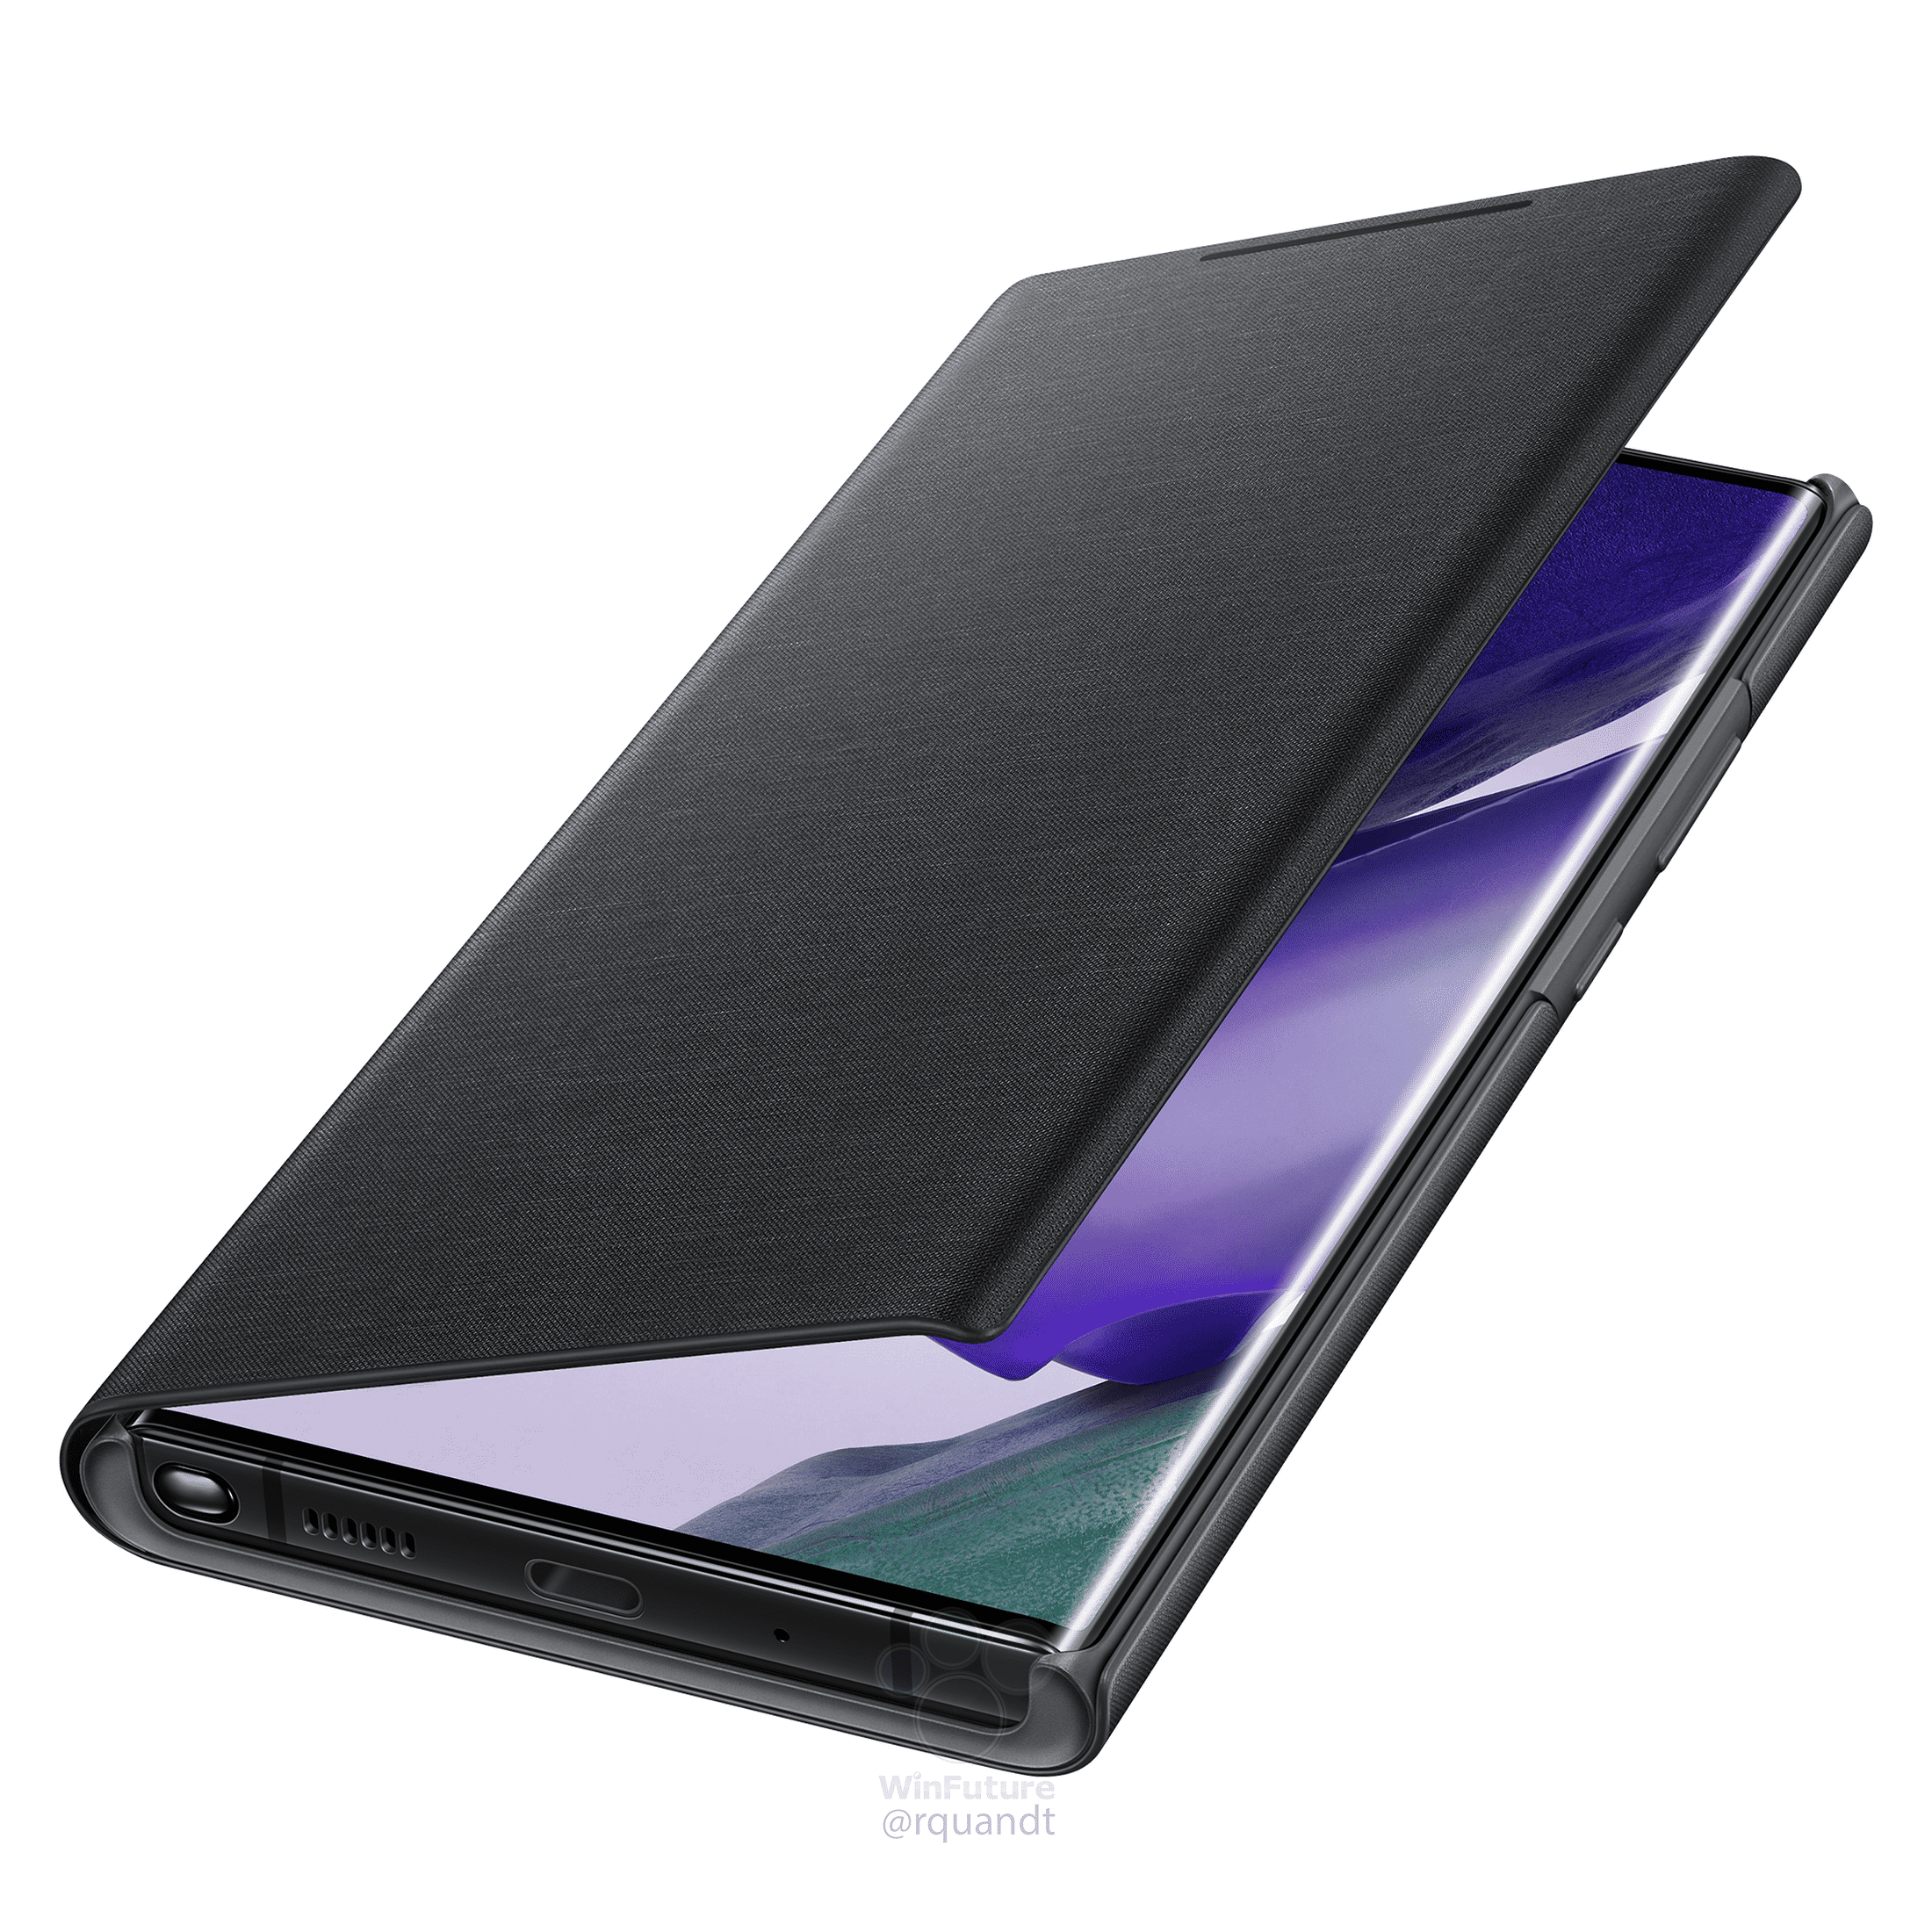 Samsung Galaxy Note 20 cases (official) - MSPoweruser